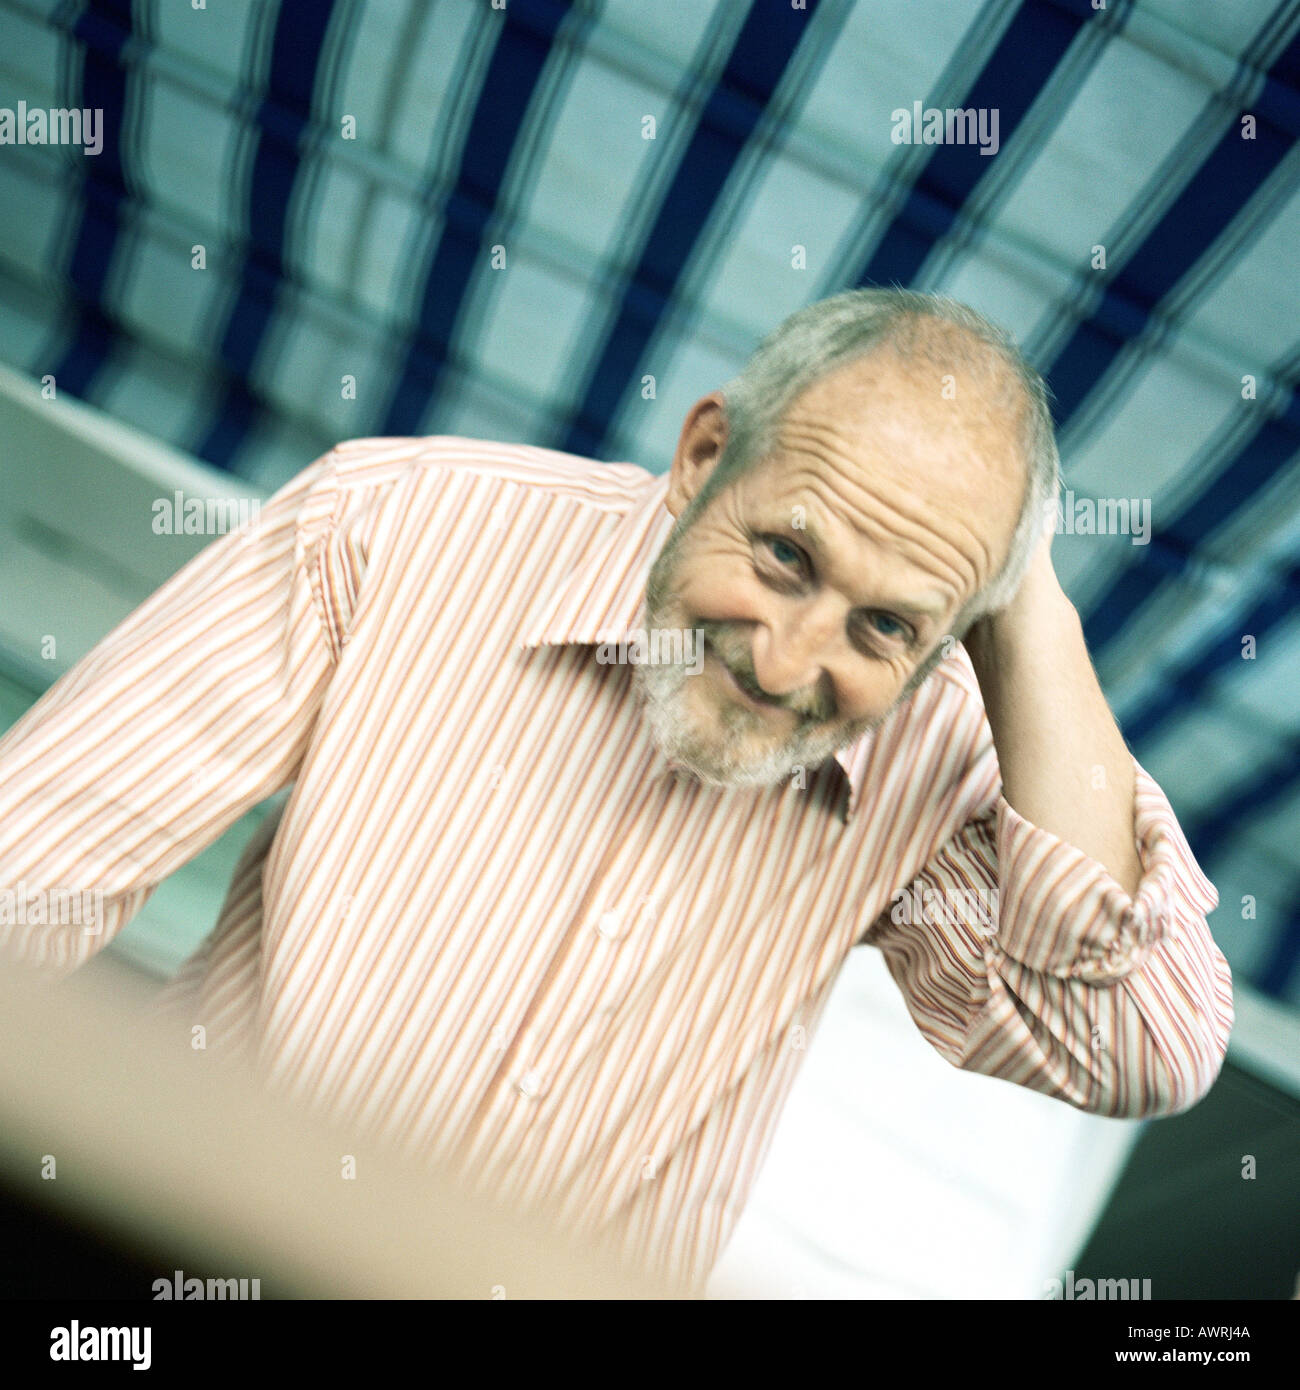 Mature man, hand behind head, portrait Stock Photo